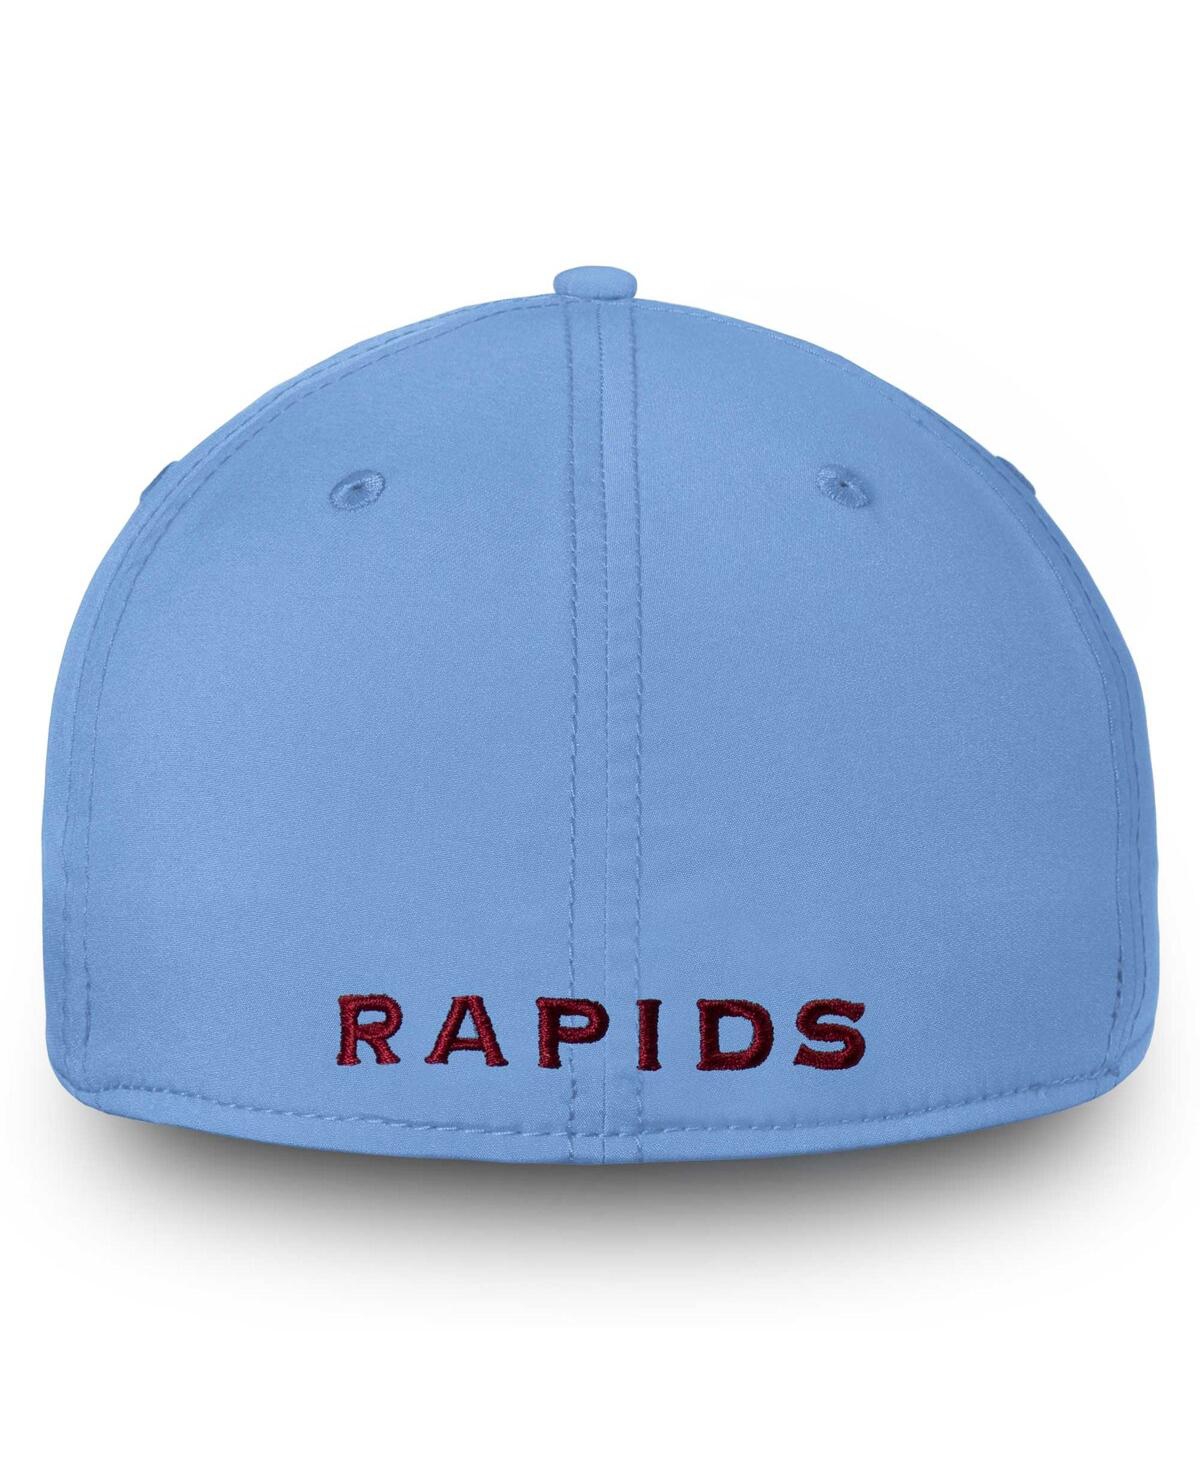 Shop Fanatics Men's  Sky Blue Colorado Rapids Elevated Speed Flex Hat